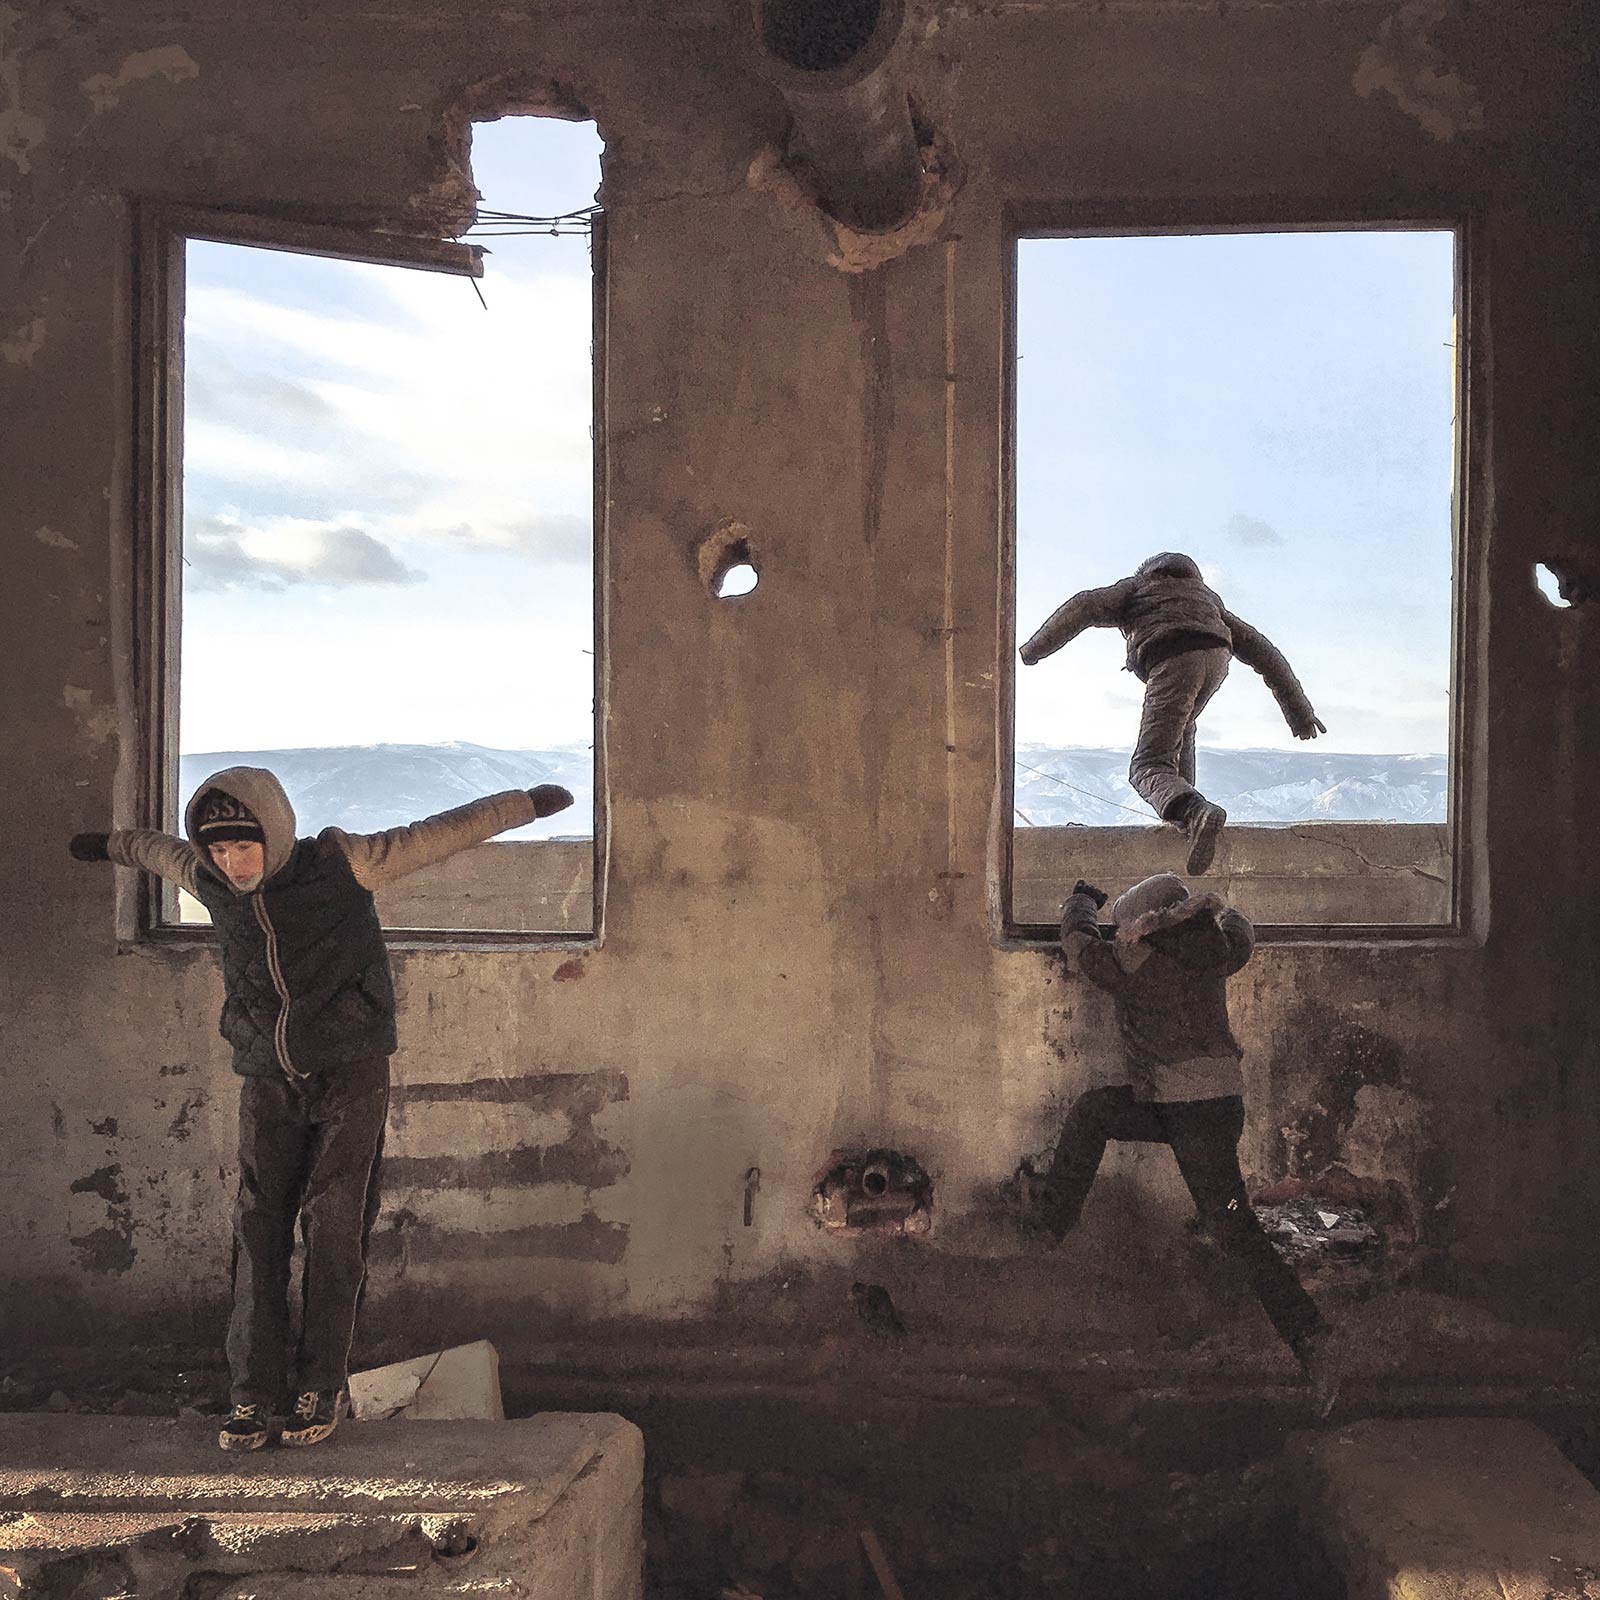 <em>Olkhon Island</em> by Dmitry Markov's iPhone photos are fascinating